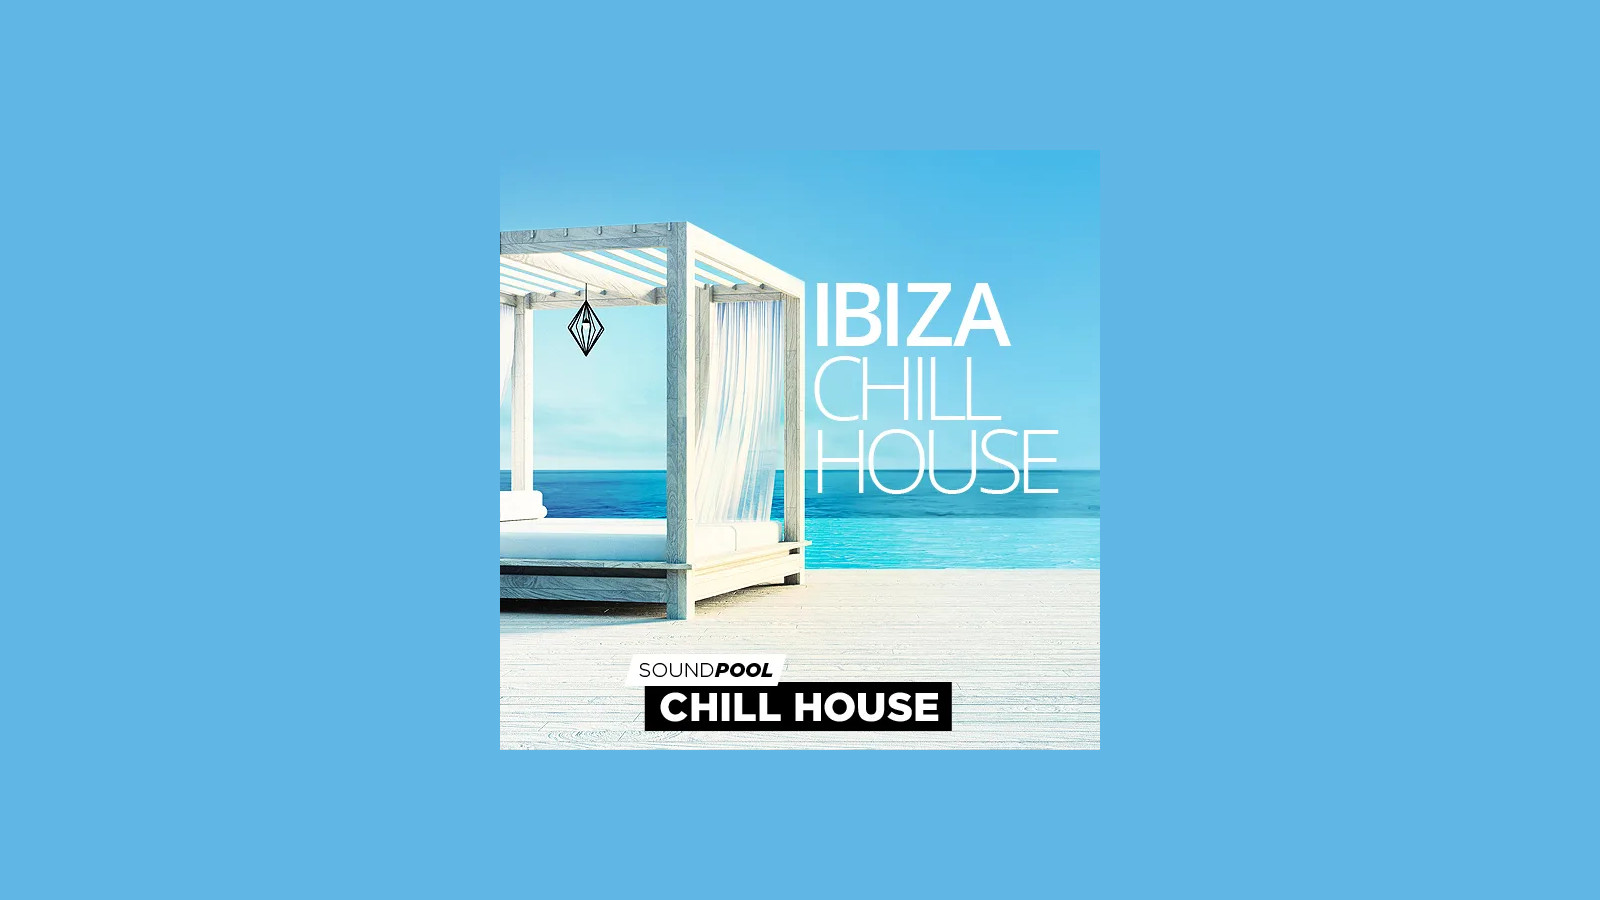 MAGIX Soundpool Ibiza Chill House ProducerPlanet CD Key, $5.65